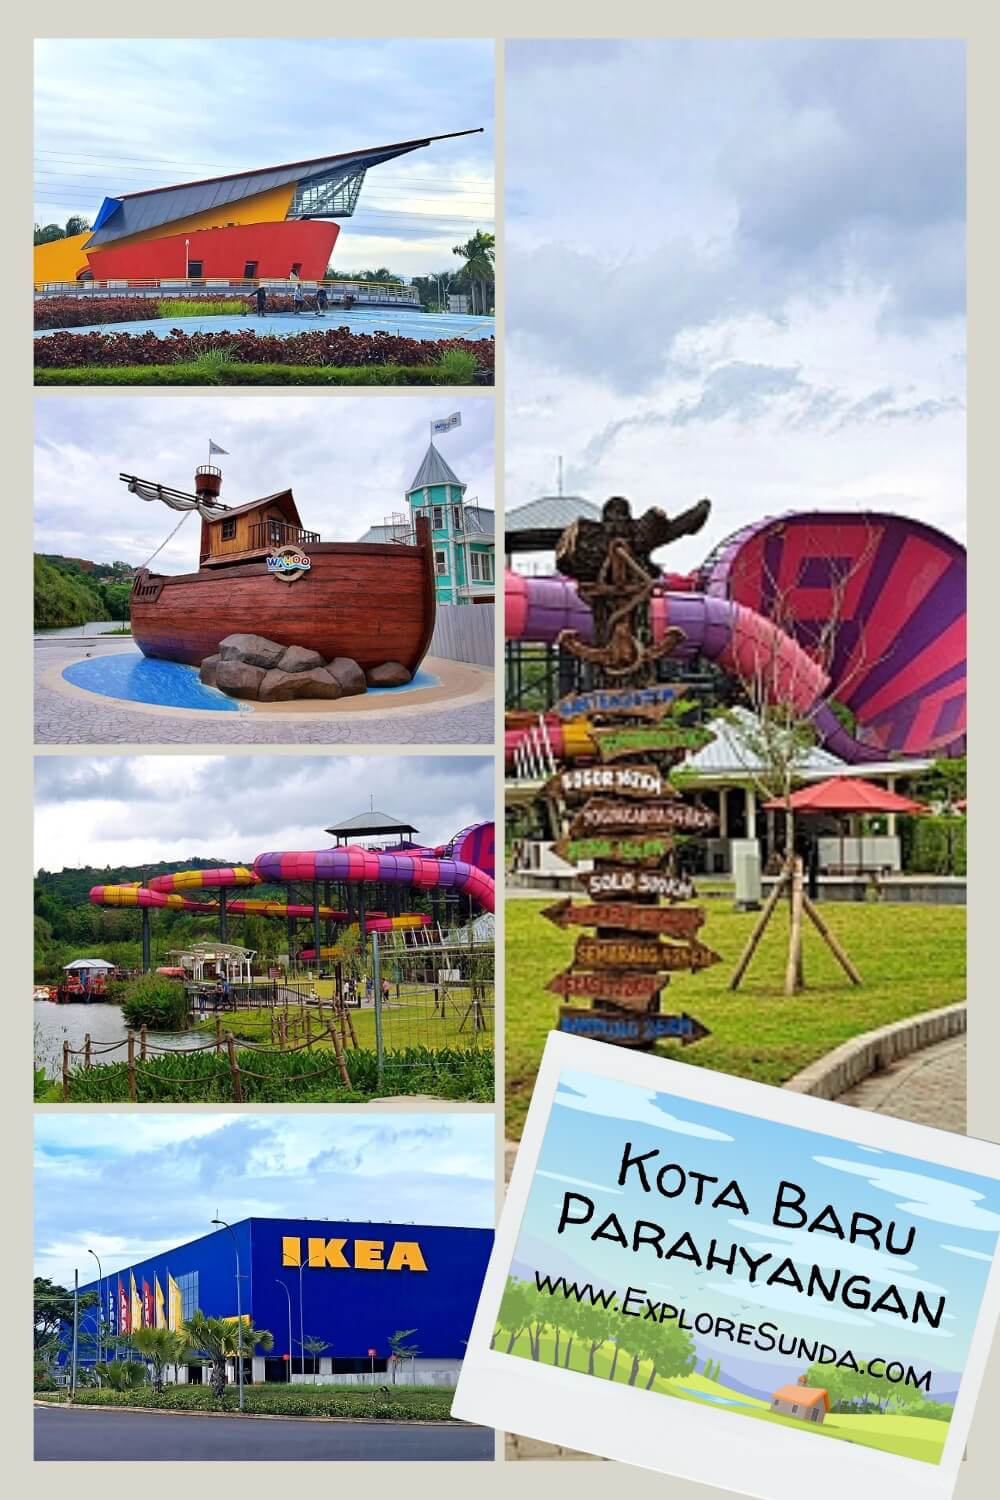 Things to do in Kota Baru Parahyangan, Bandung: from learning science in Puspa Iptek Sundial to go water-sliding in Wahoo Waterworld and relaxing in Tepi Danau.